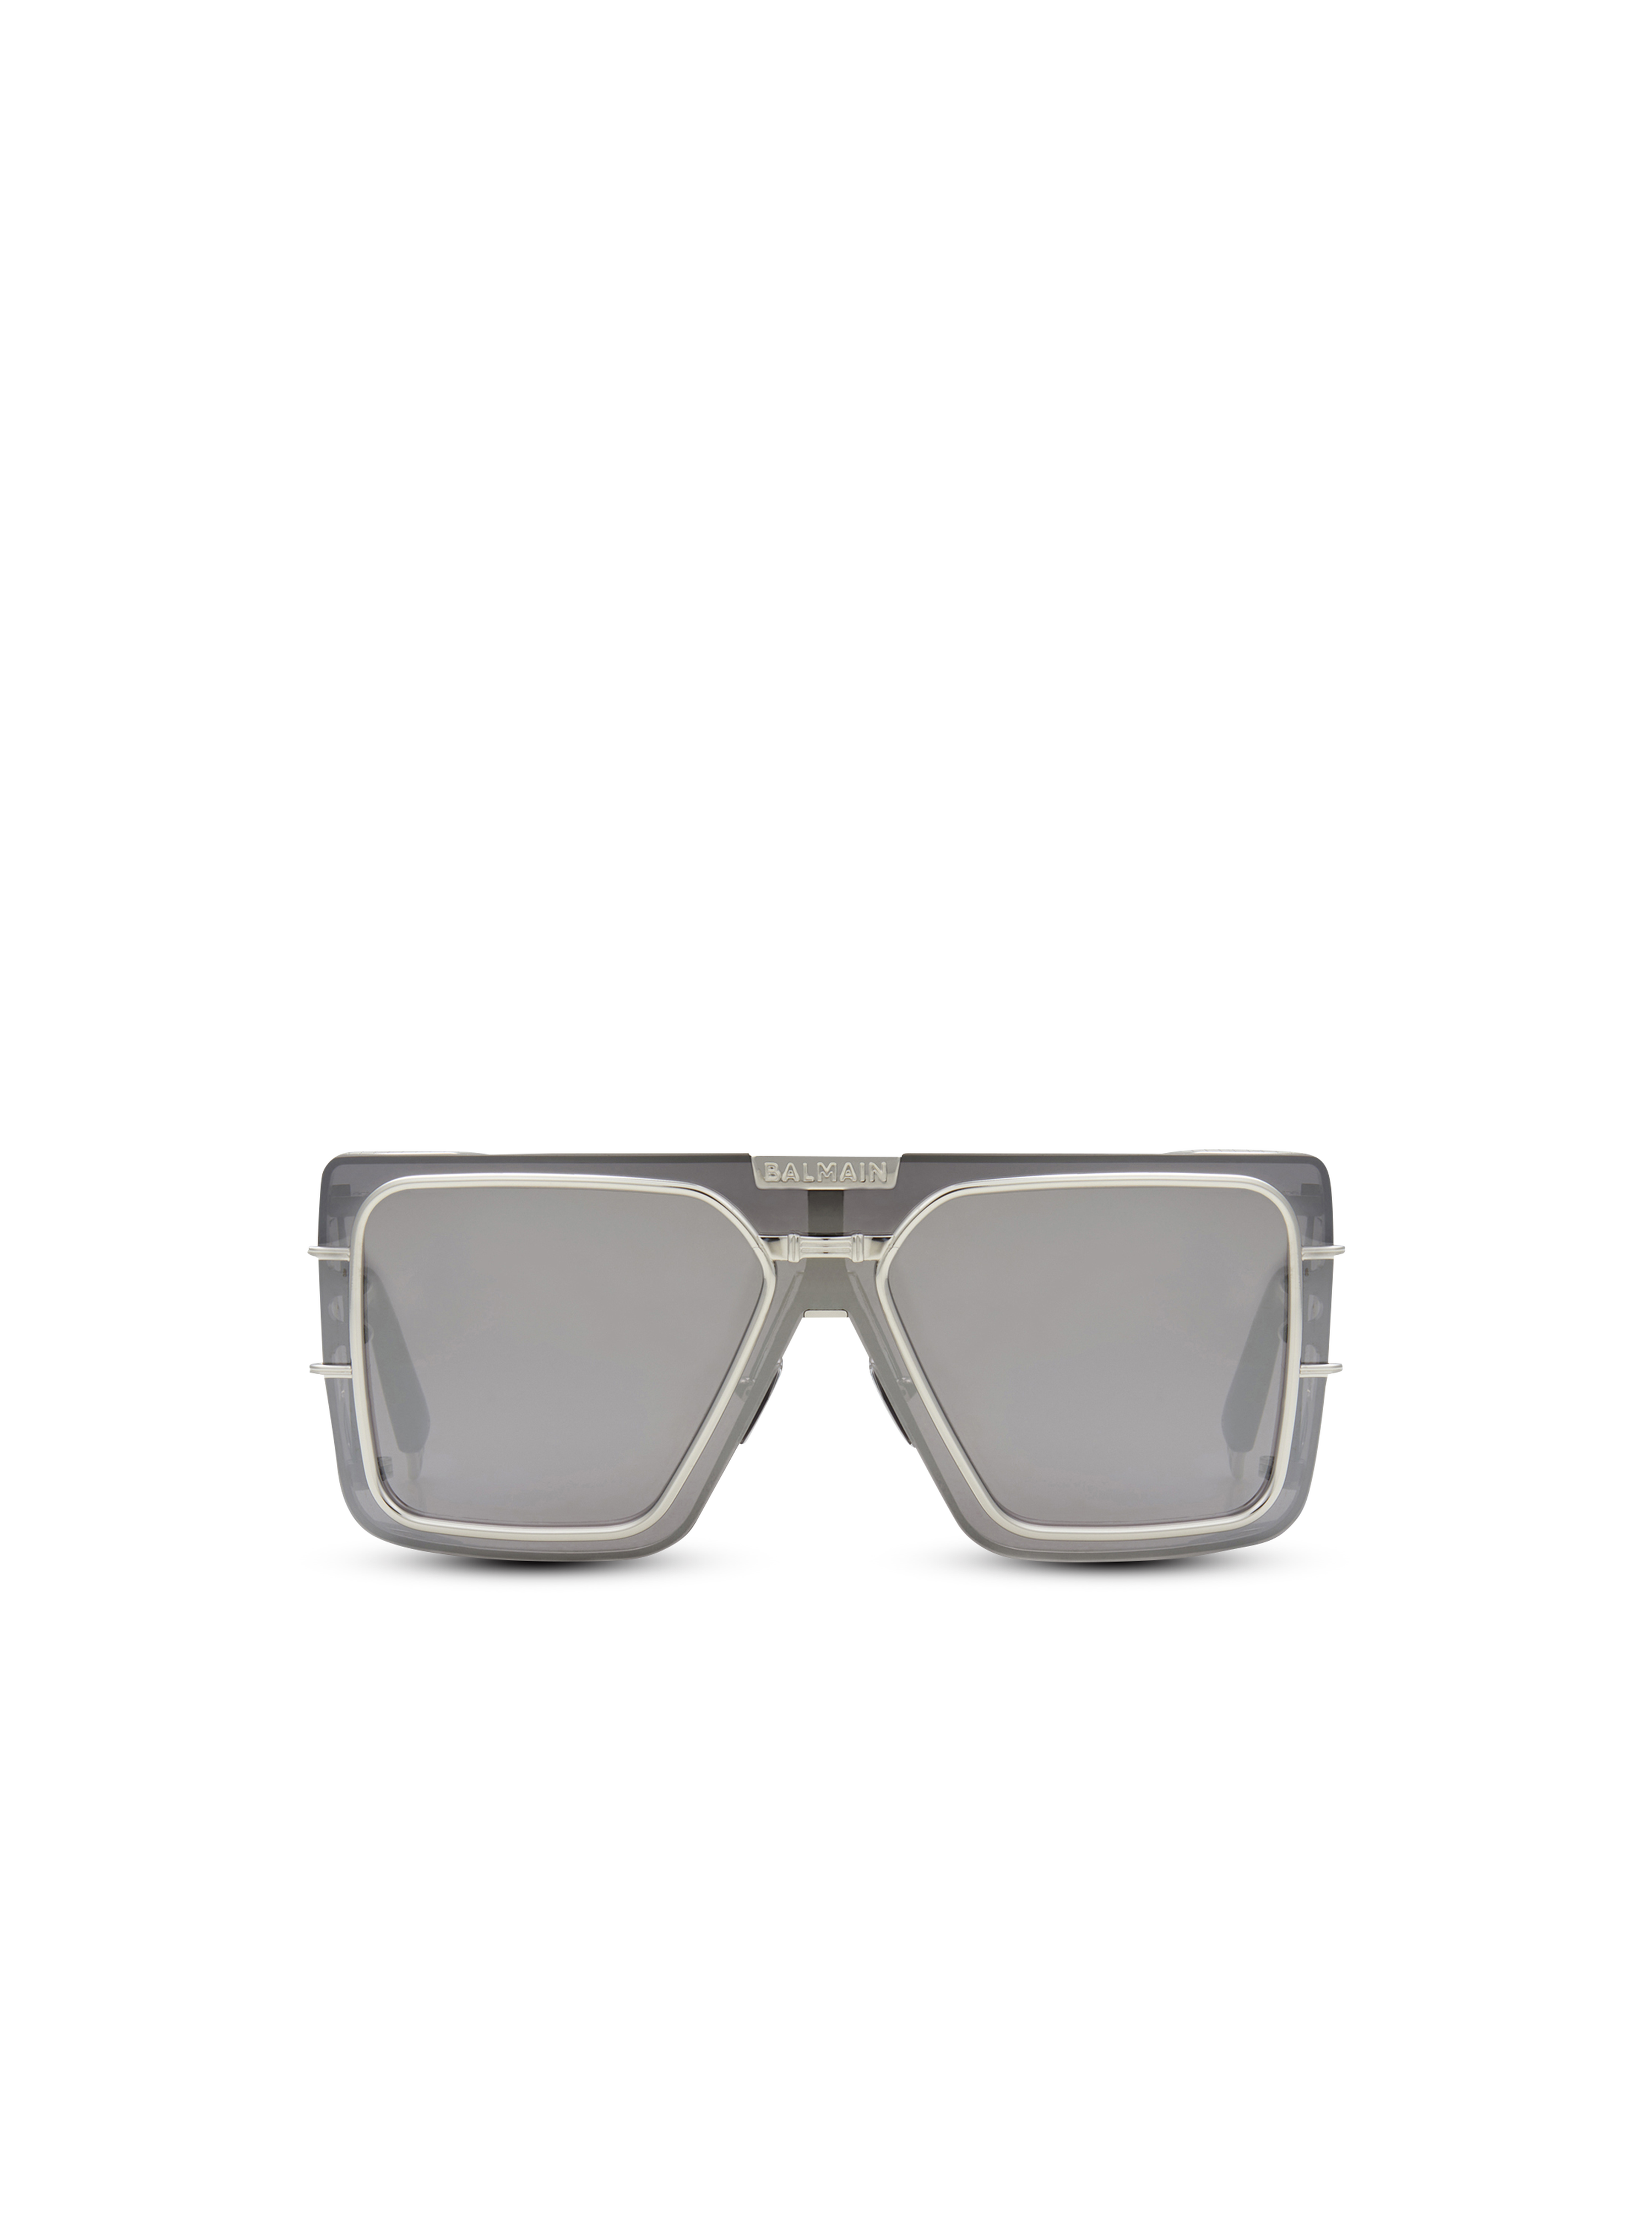 Gold-tone and dark gray titanium shield-shaped Wonder Boy sunglasses, grey